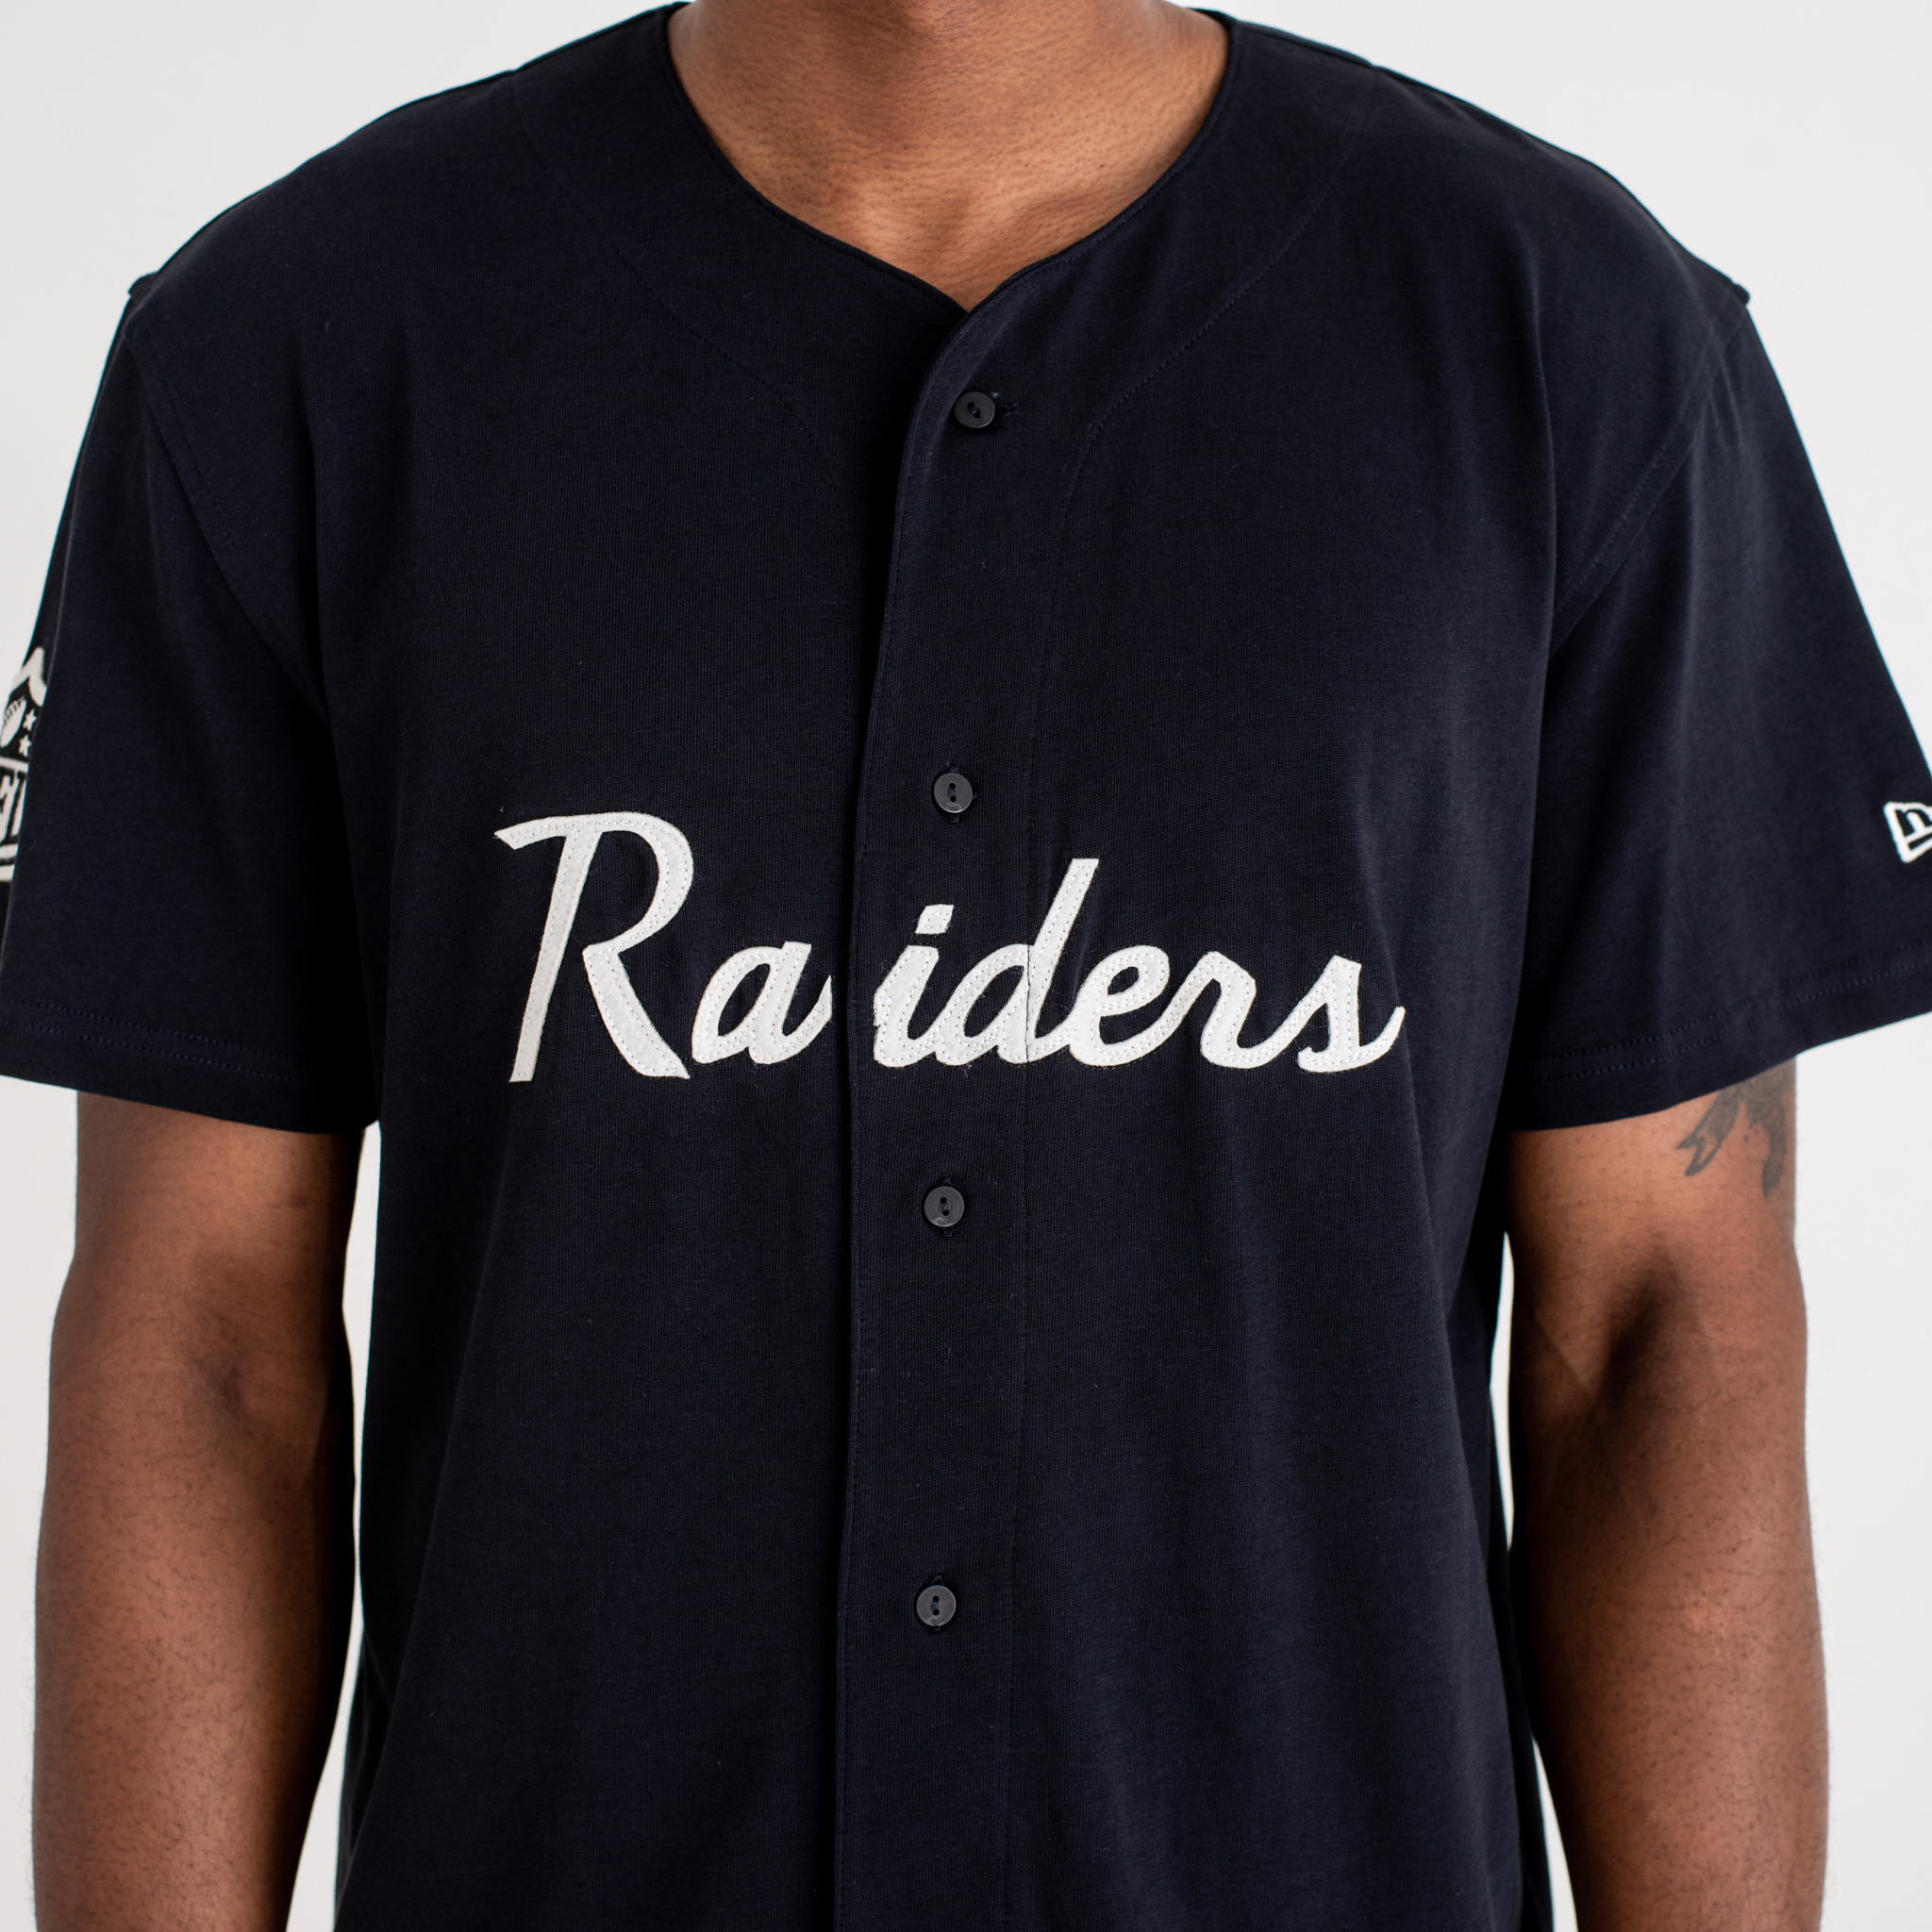 raiders button up shirt